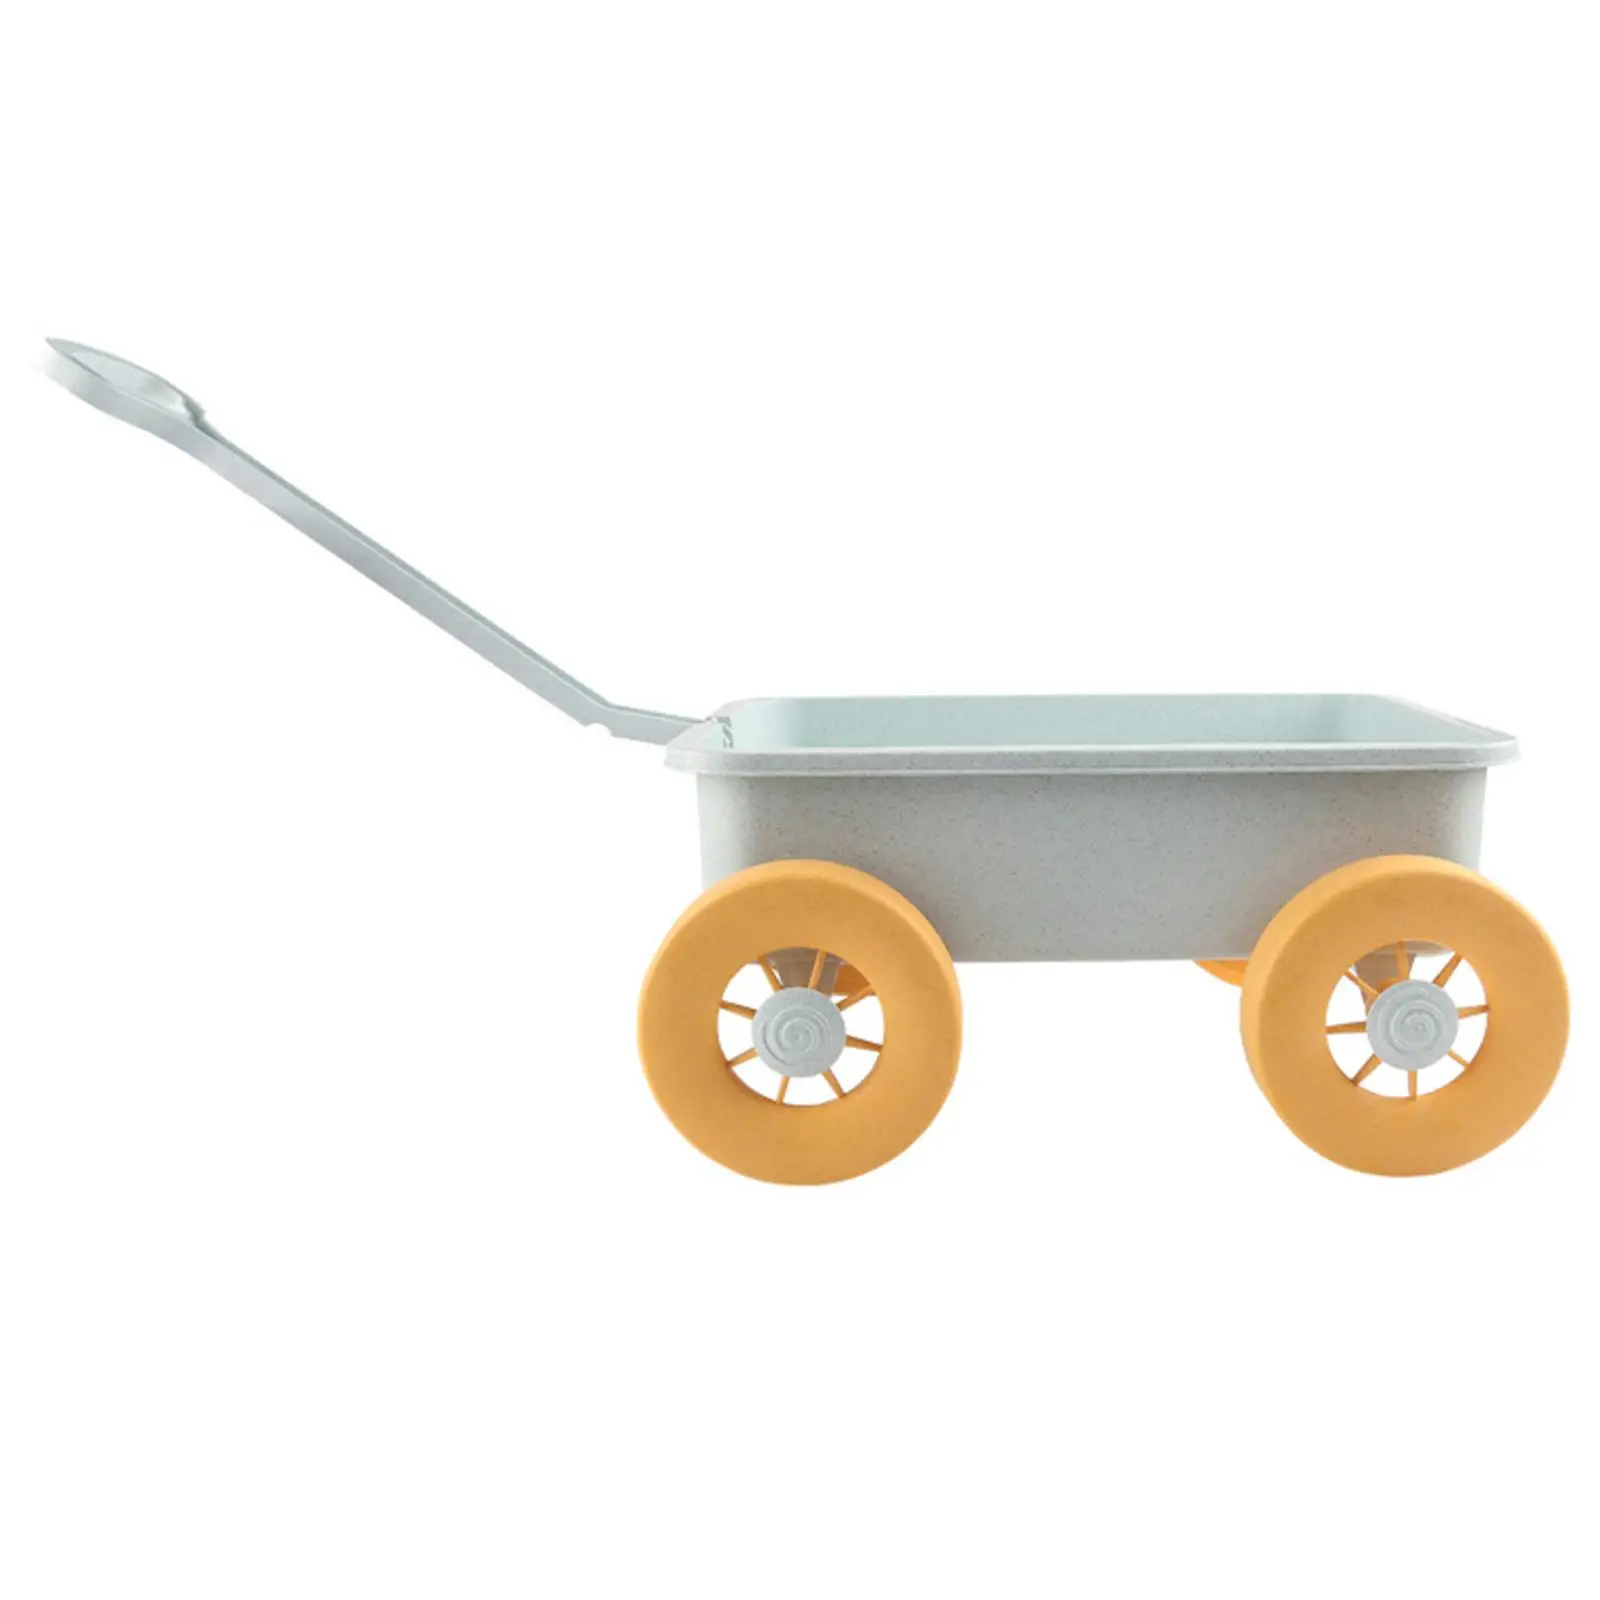 Small Wagon Toys Beach Toys Vehicle Outdoor Game Wagon Garden Wagon Tools Toy Wheelbarrow for Stuffed Animals